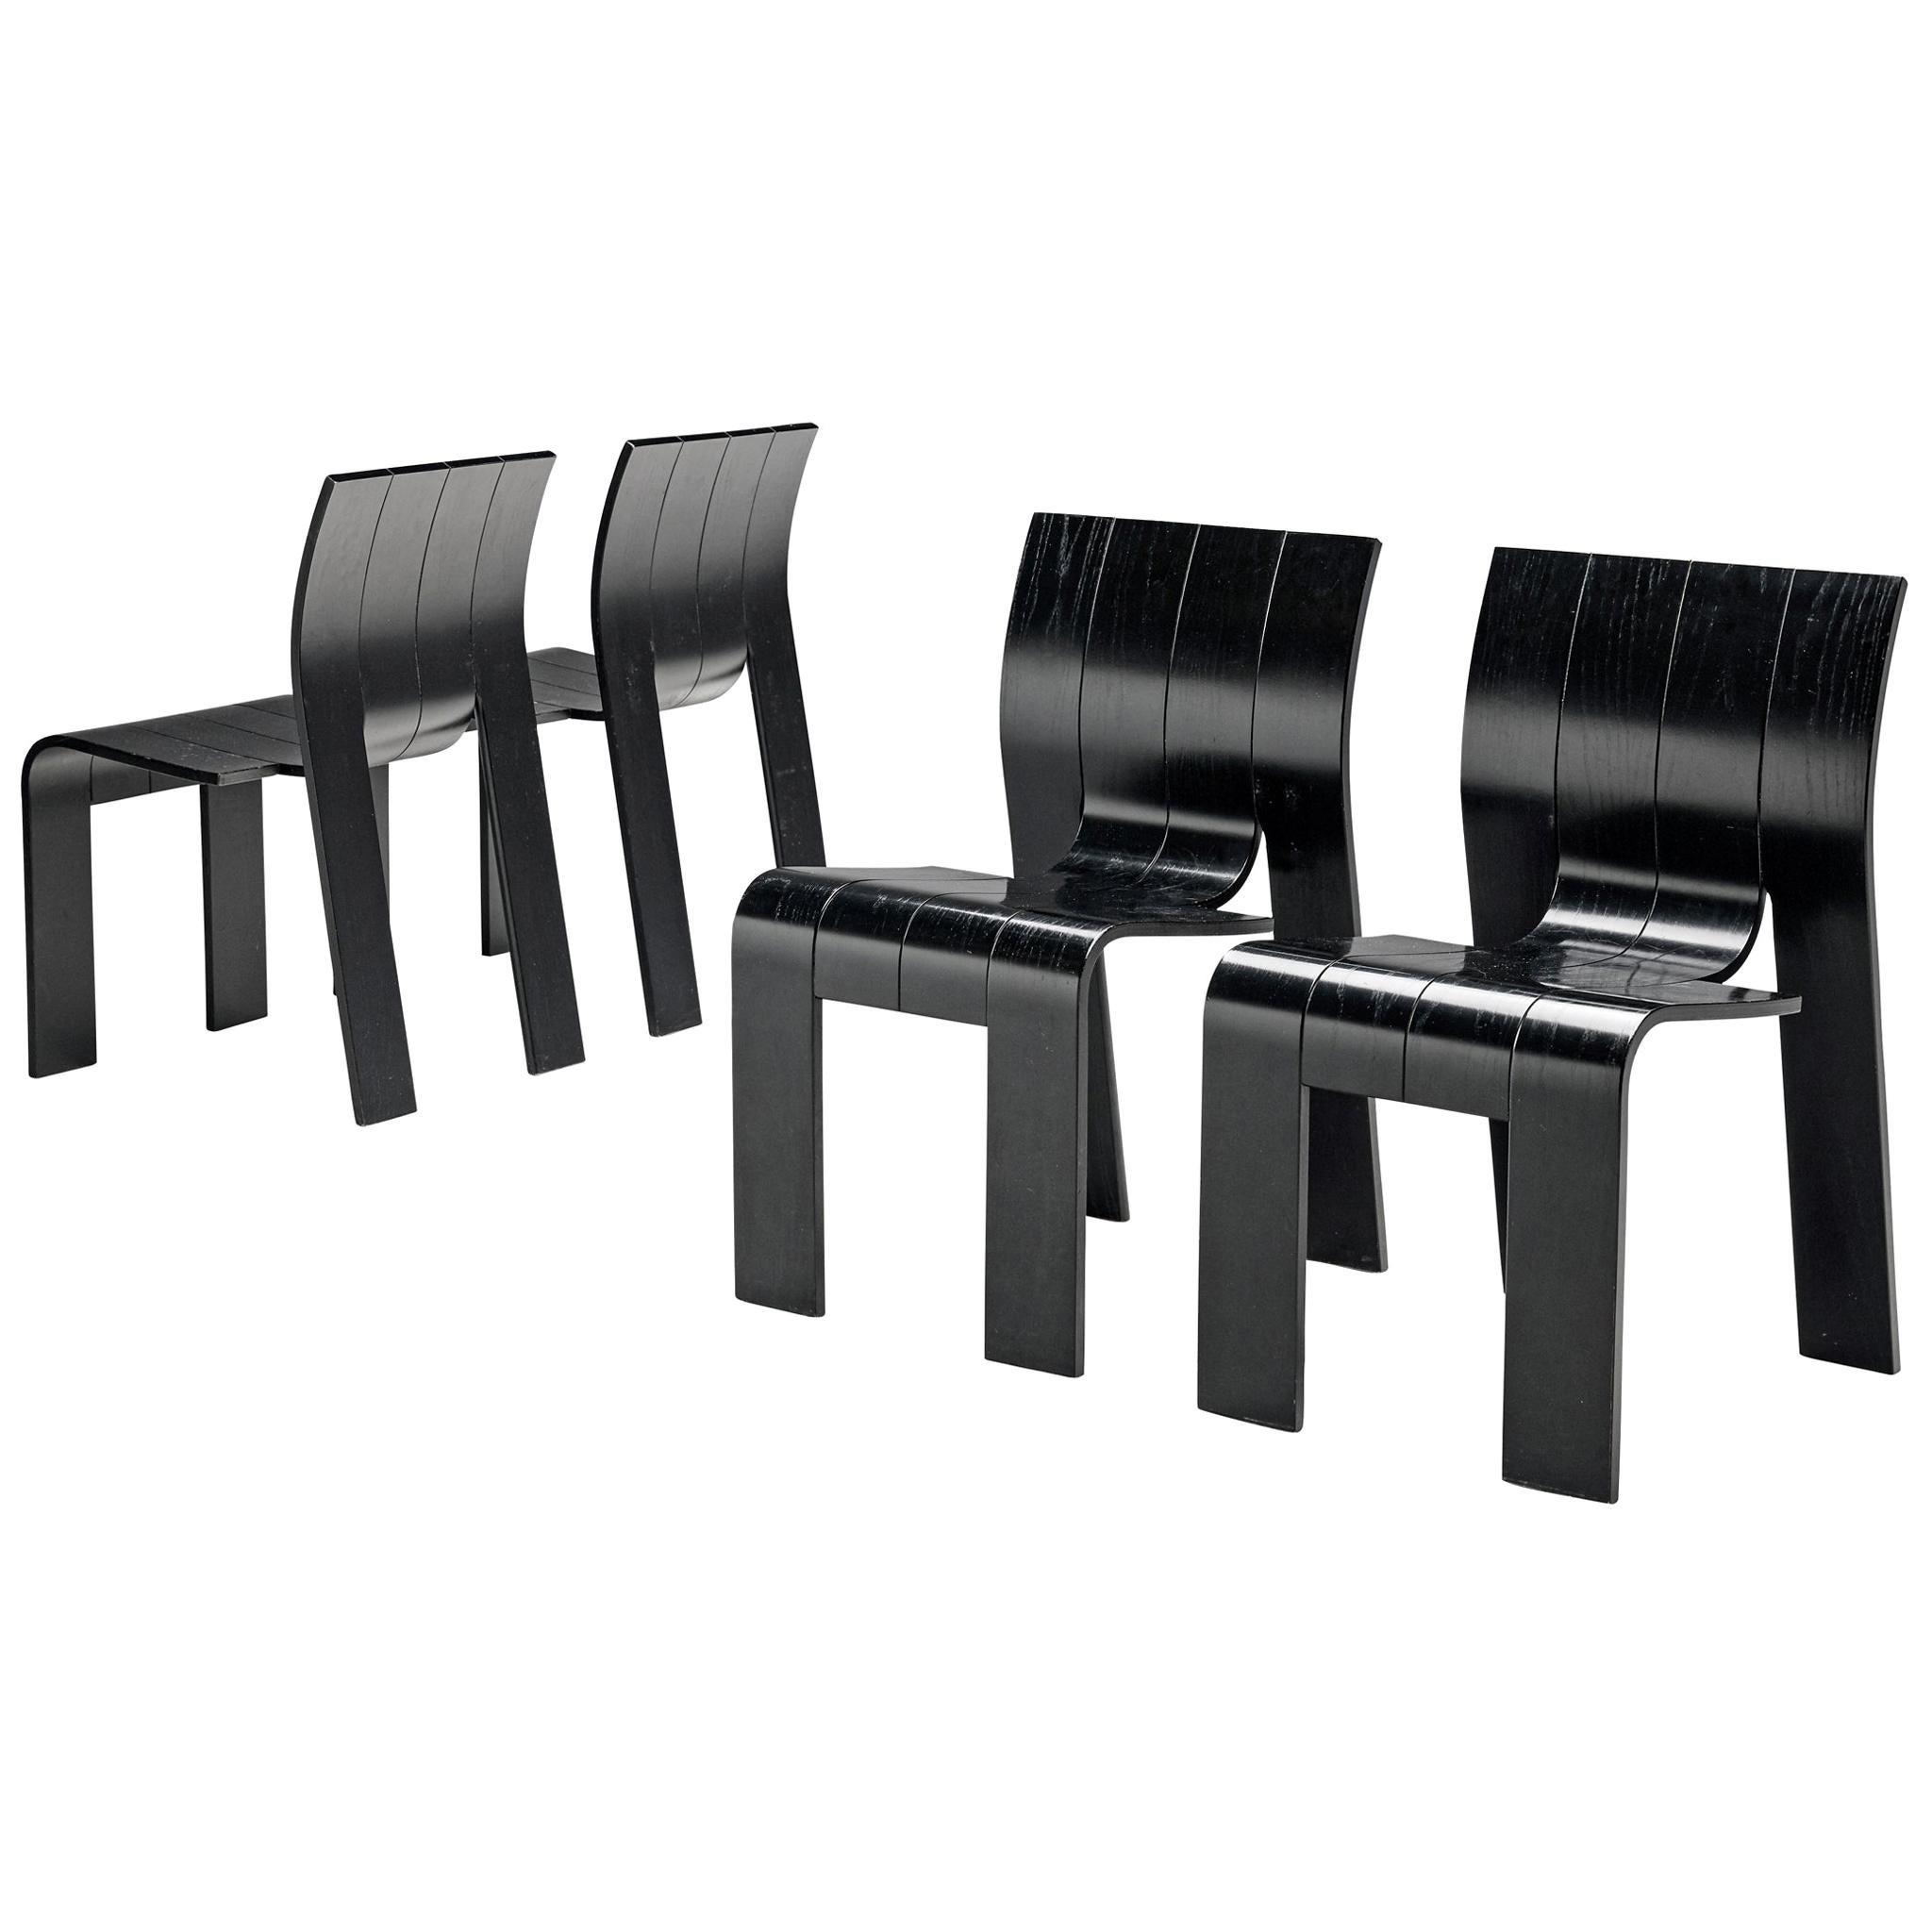 Gijs Bakker Black 'Strip' Chairs